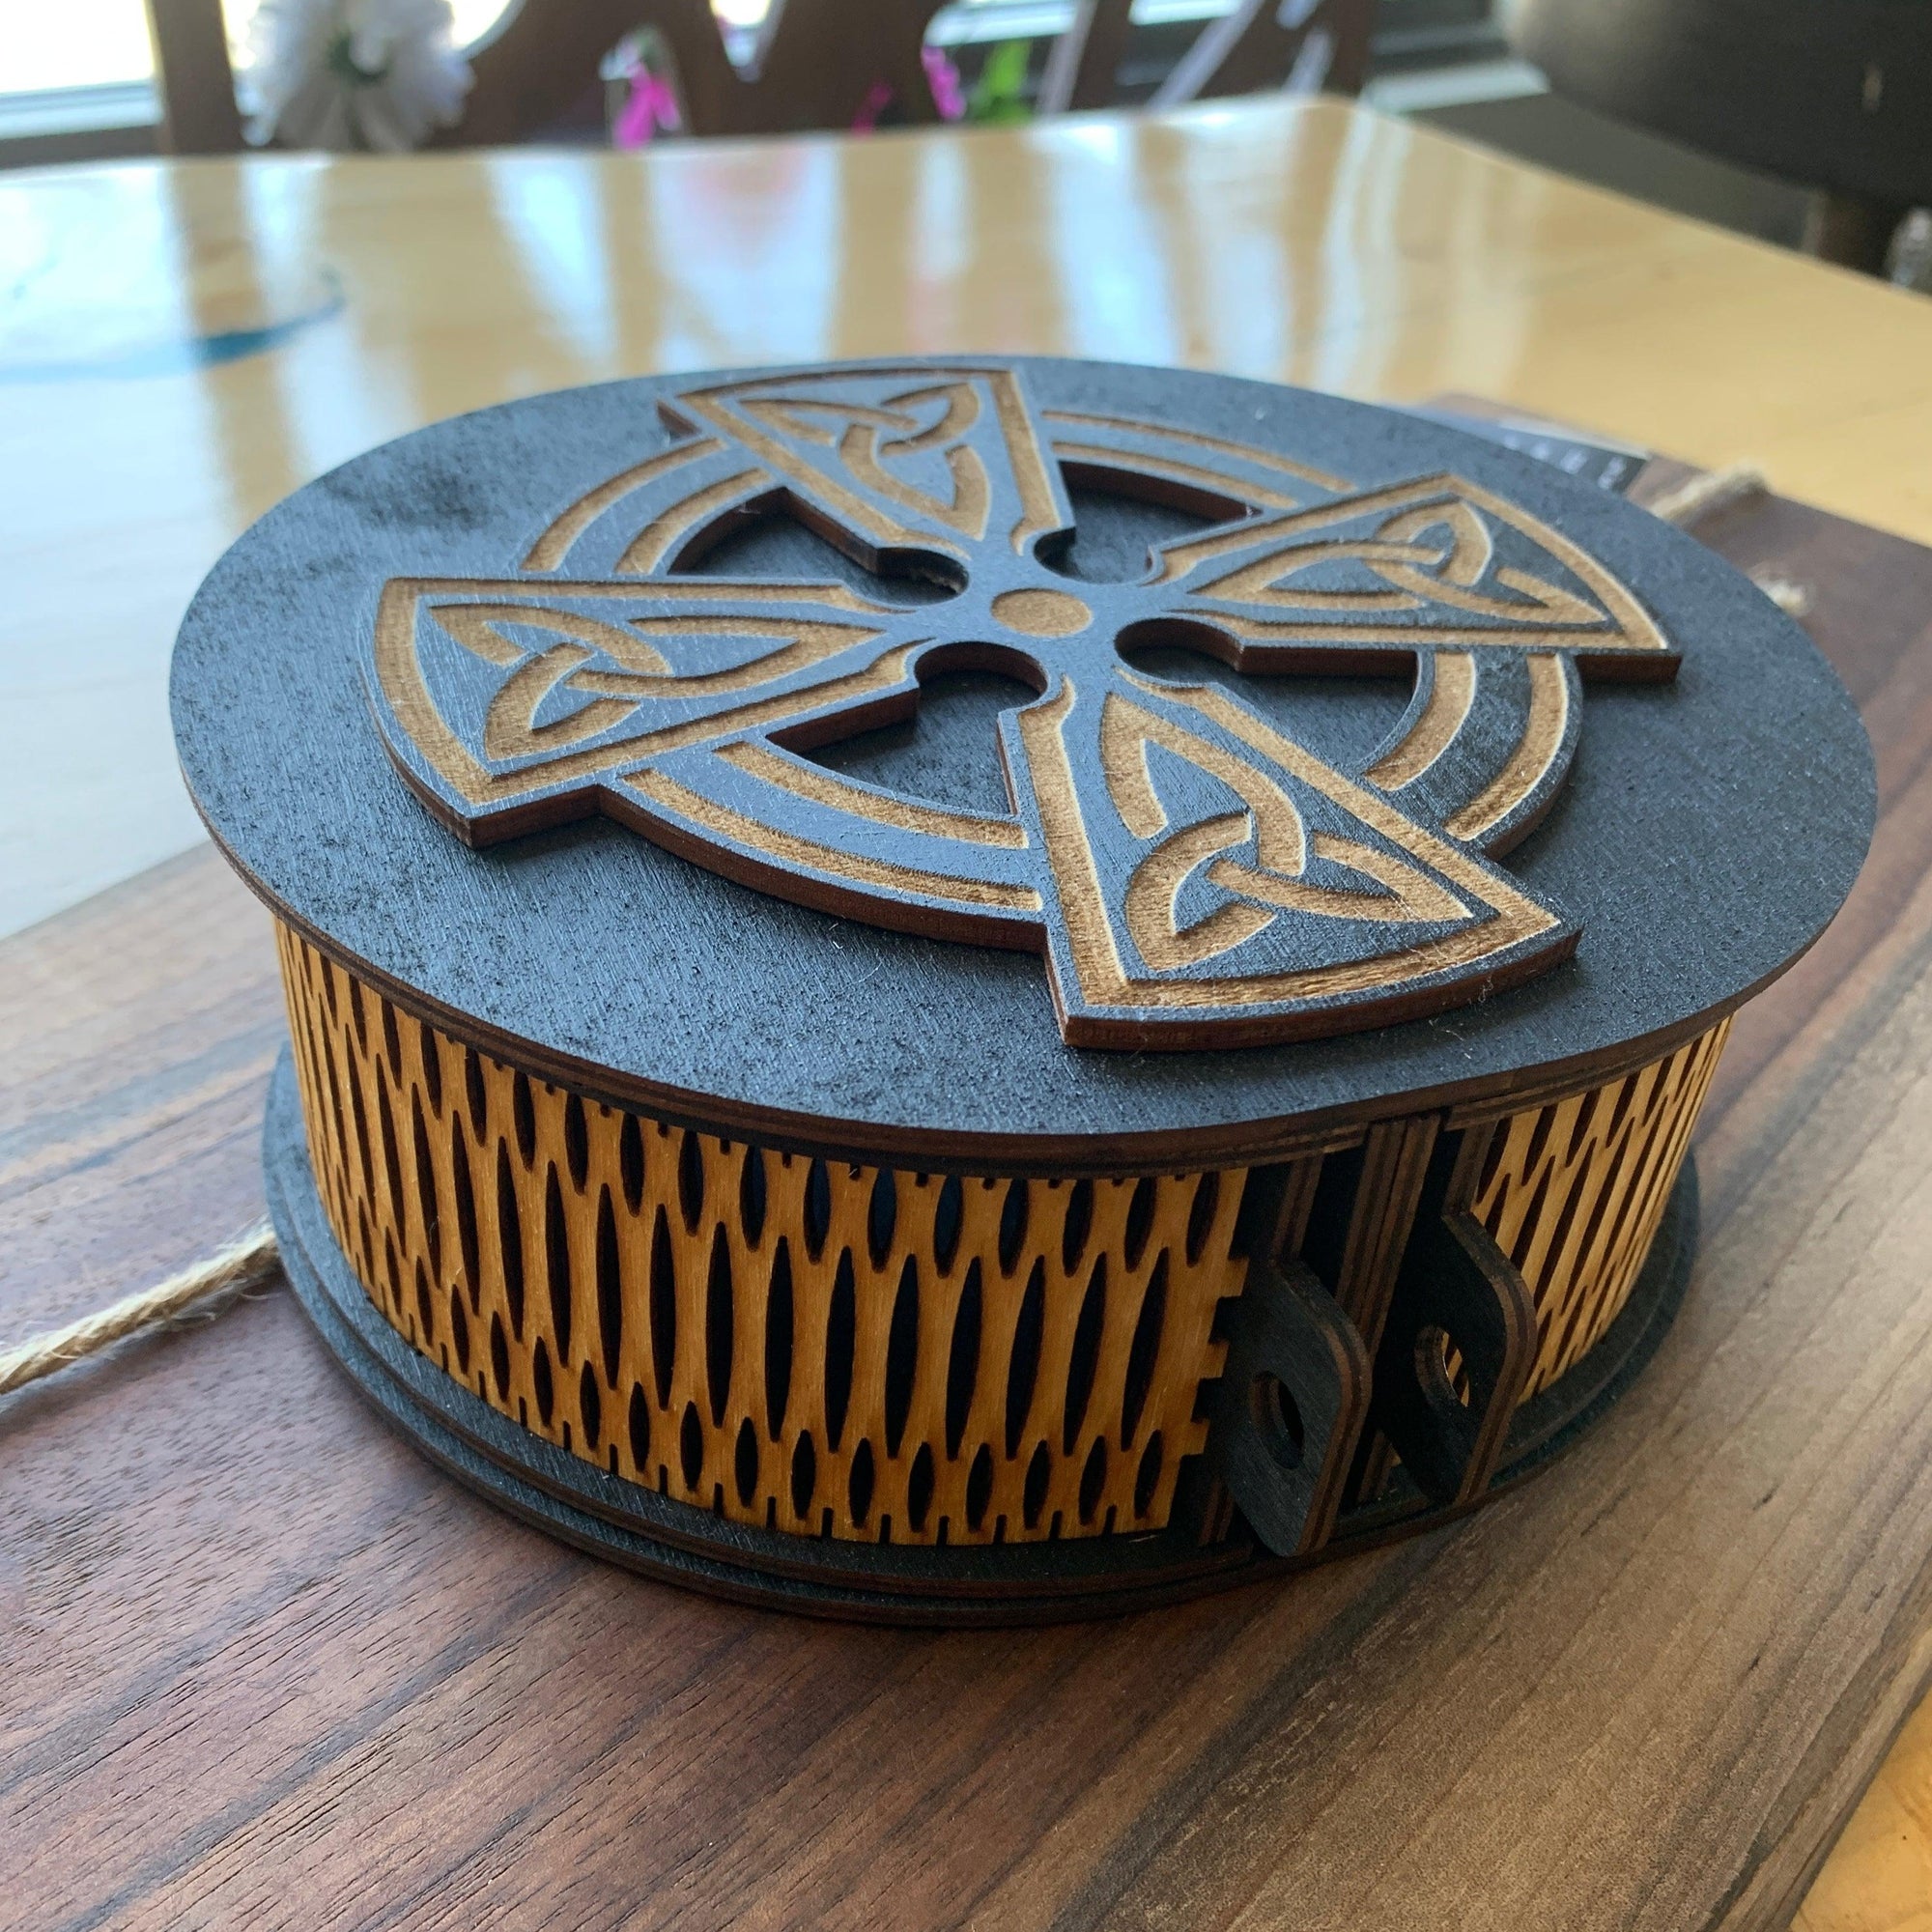 keepsake Box with Celtic cross - Northern Heart Designs